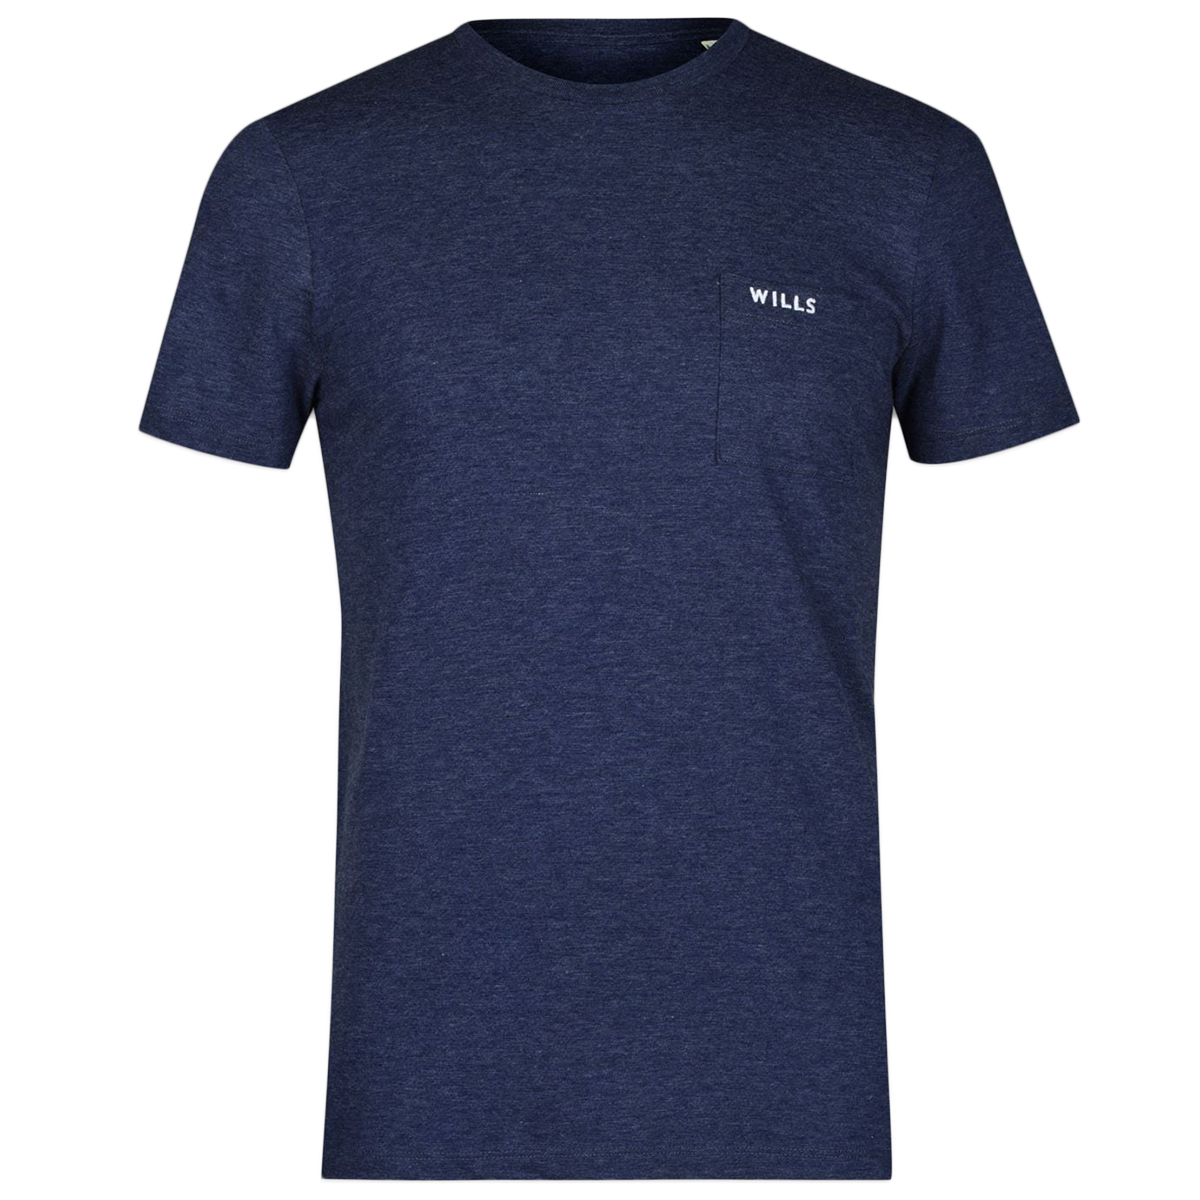 Jack Wills Men's Ayleford Pocket T-Shirt - Black, XL